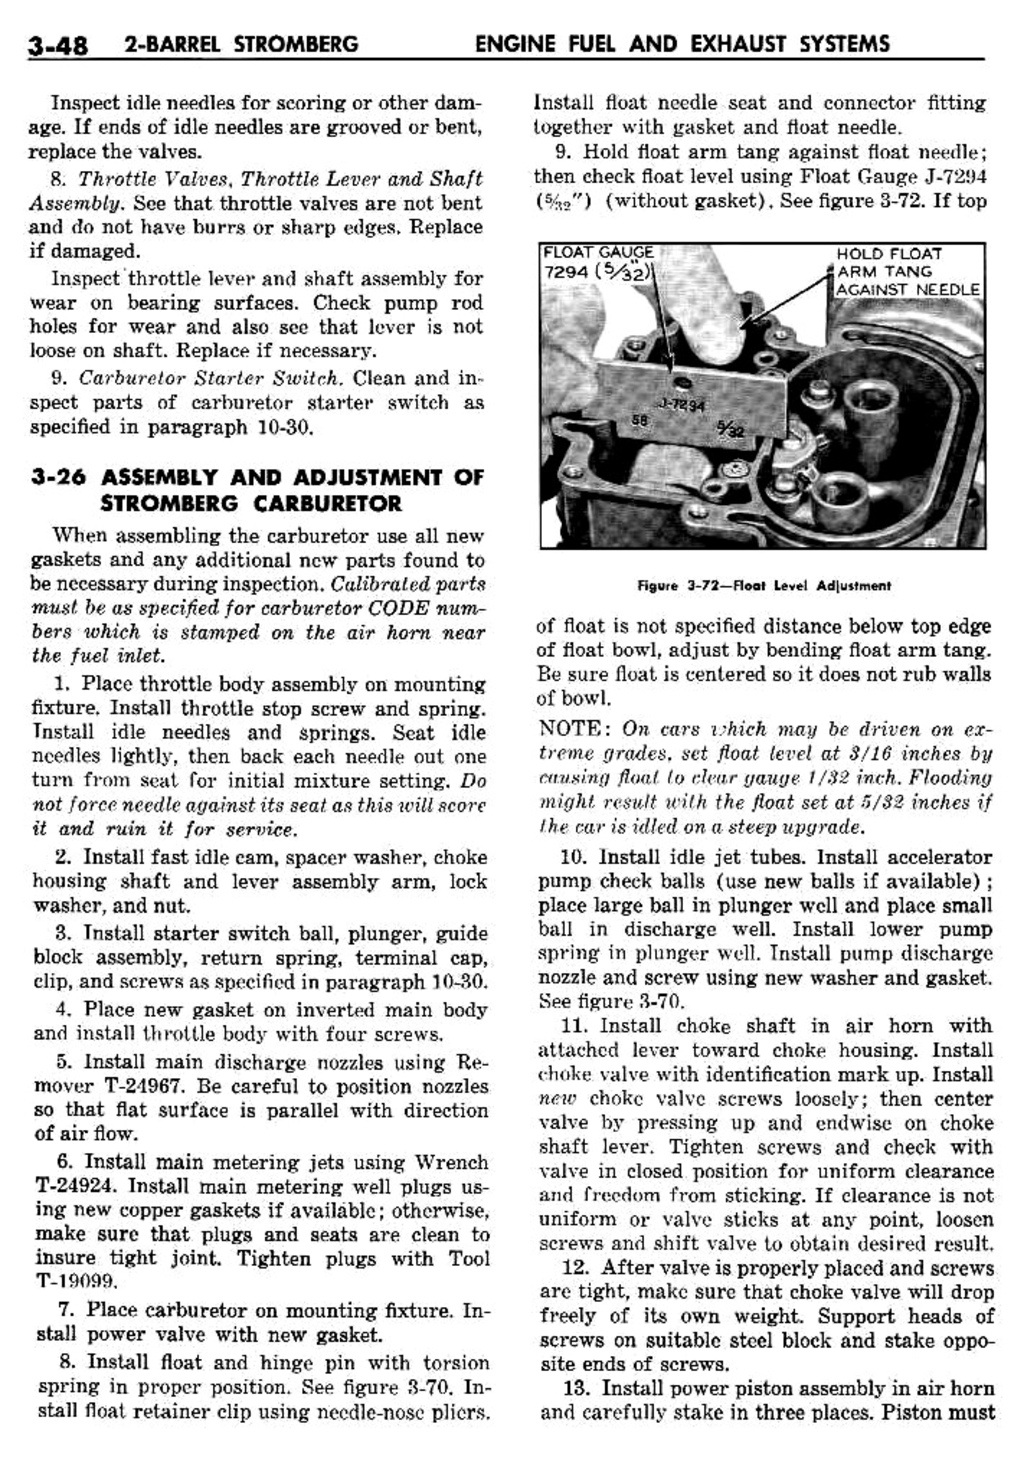 n_04 1960 Buick Shop Manual - Engine Fuel & Exhaust-048-048.jpg